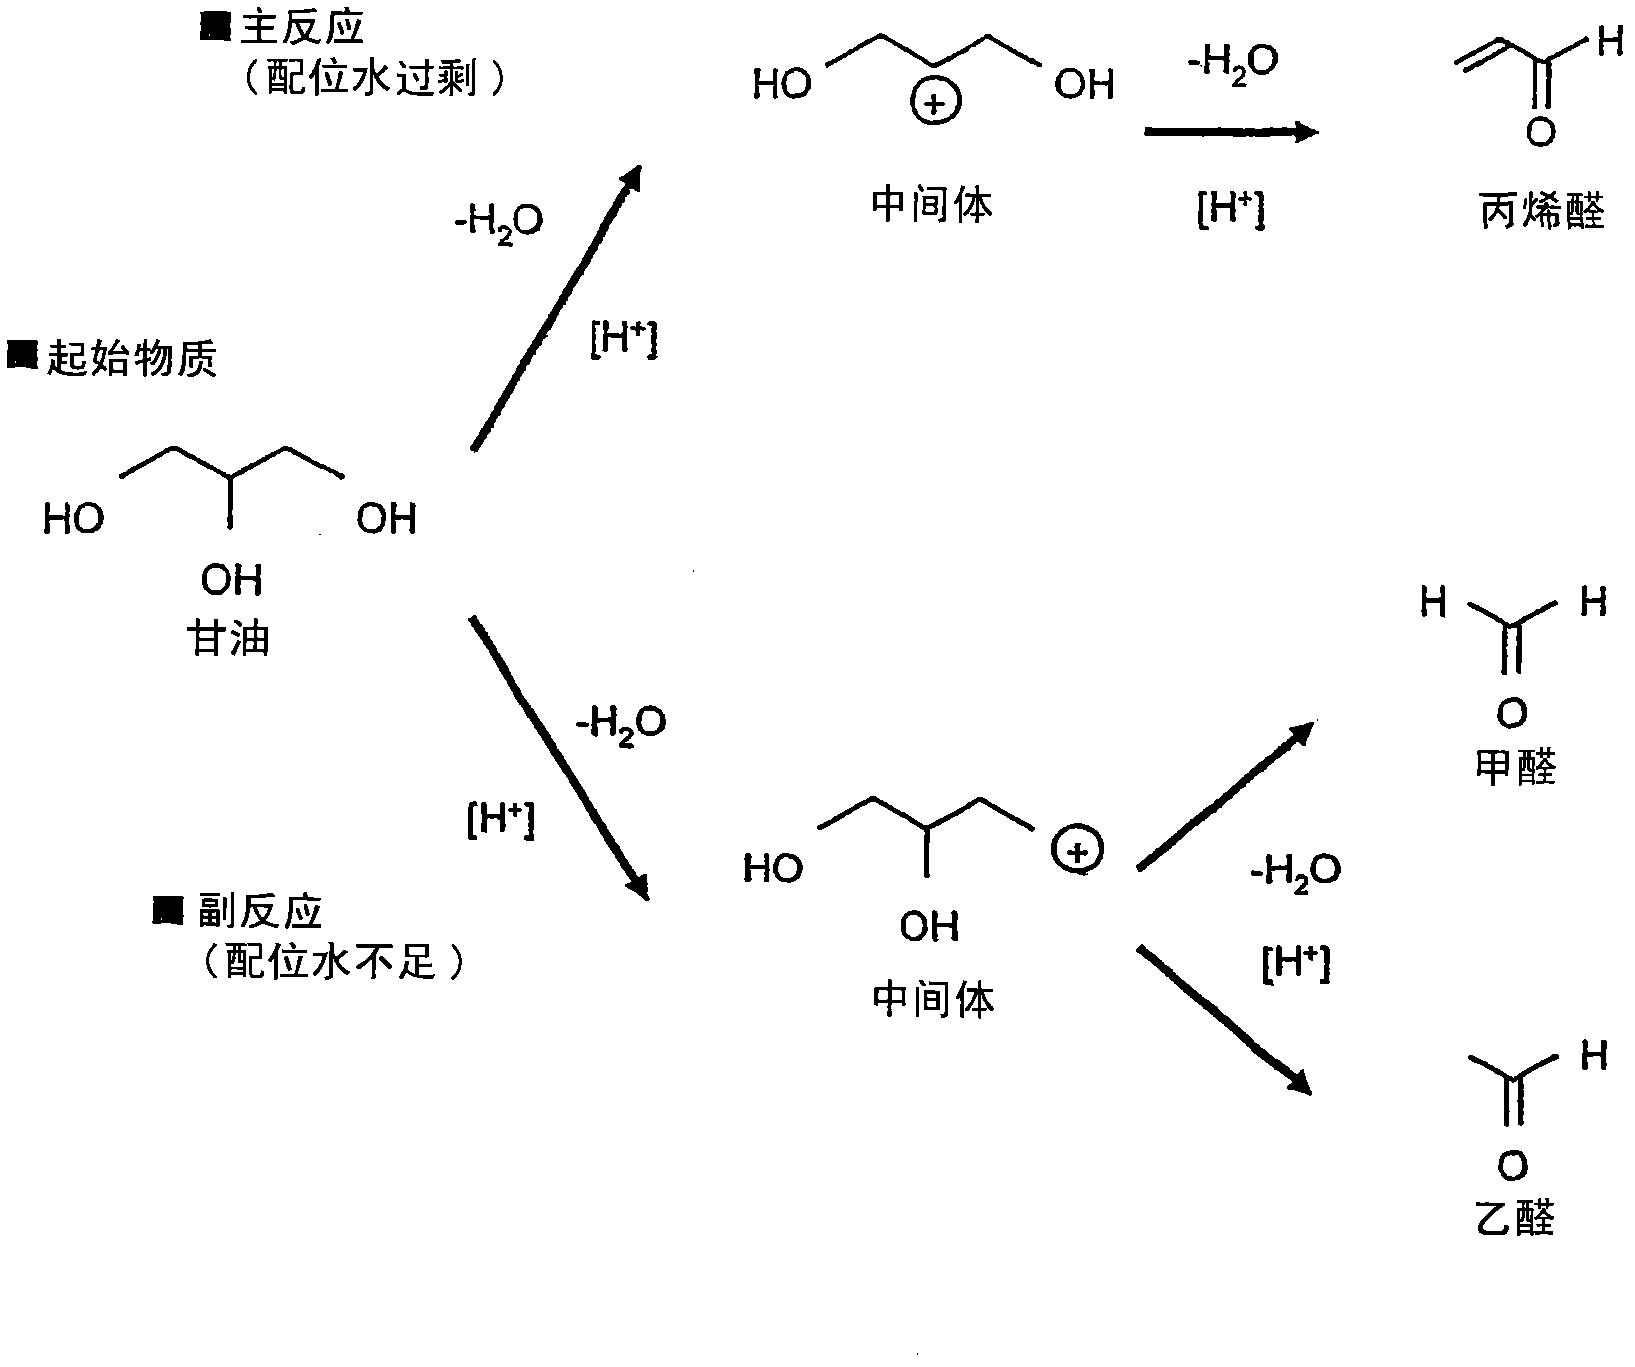 Method for synthesizing acrolein